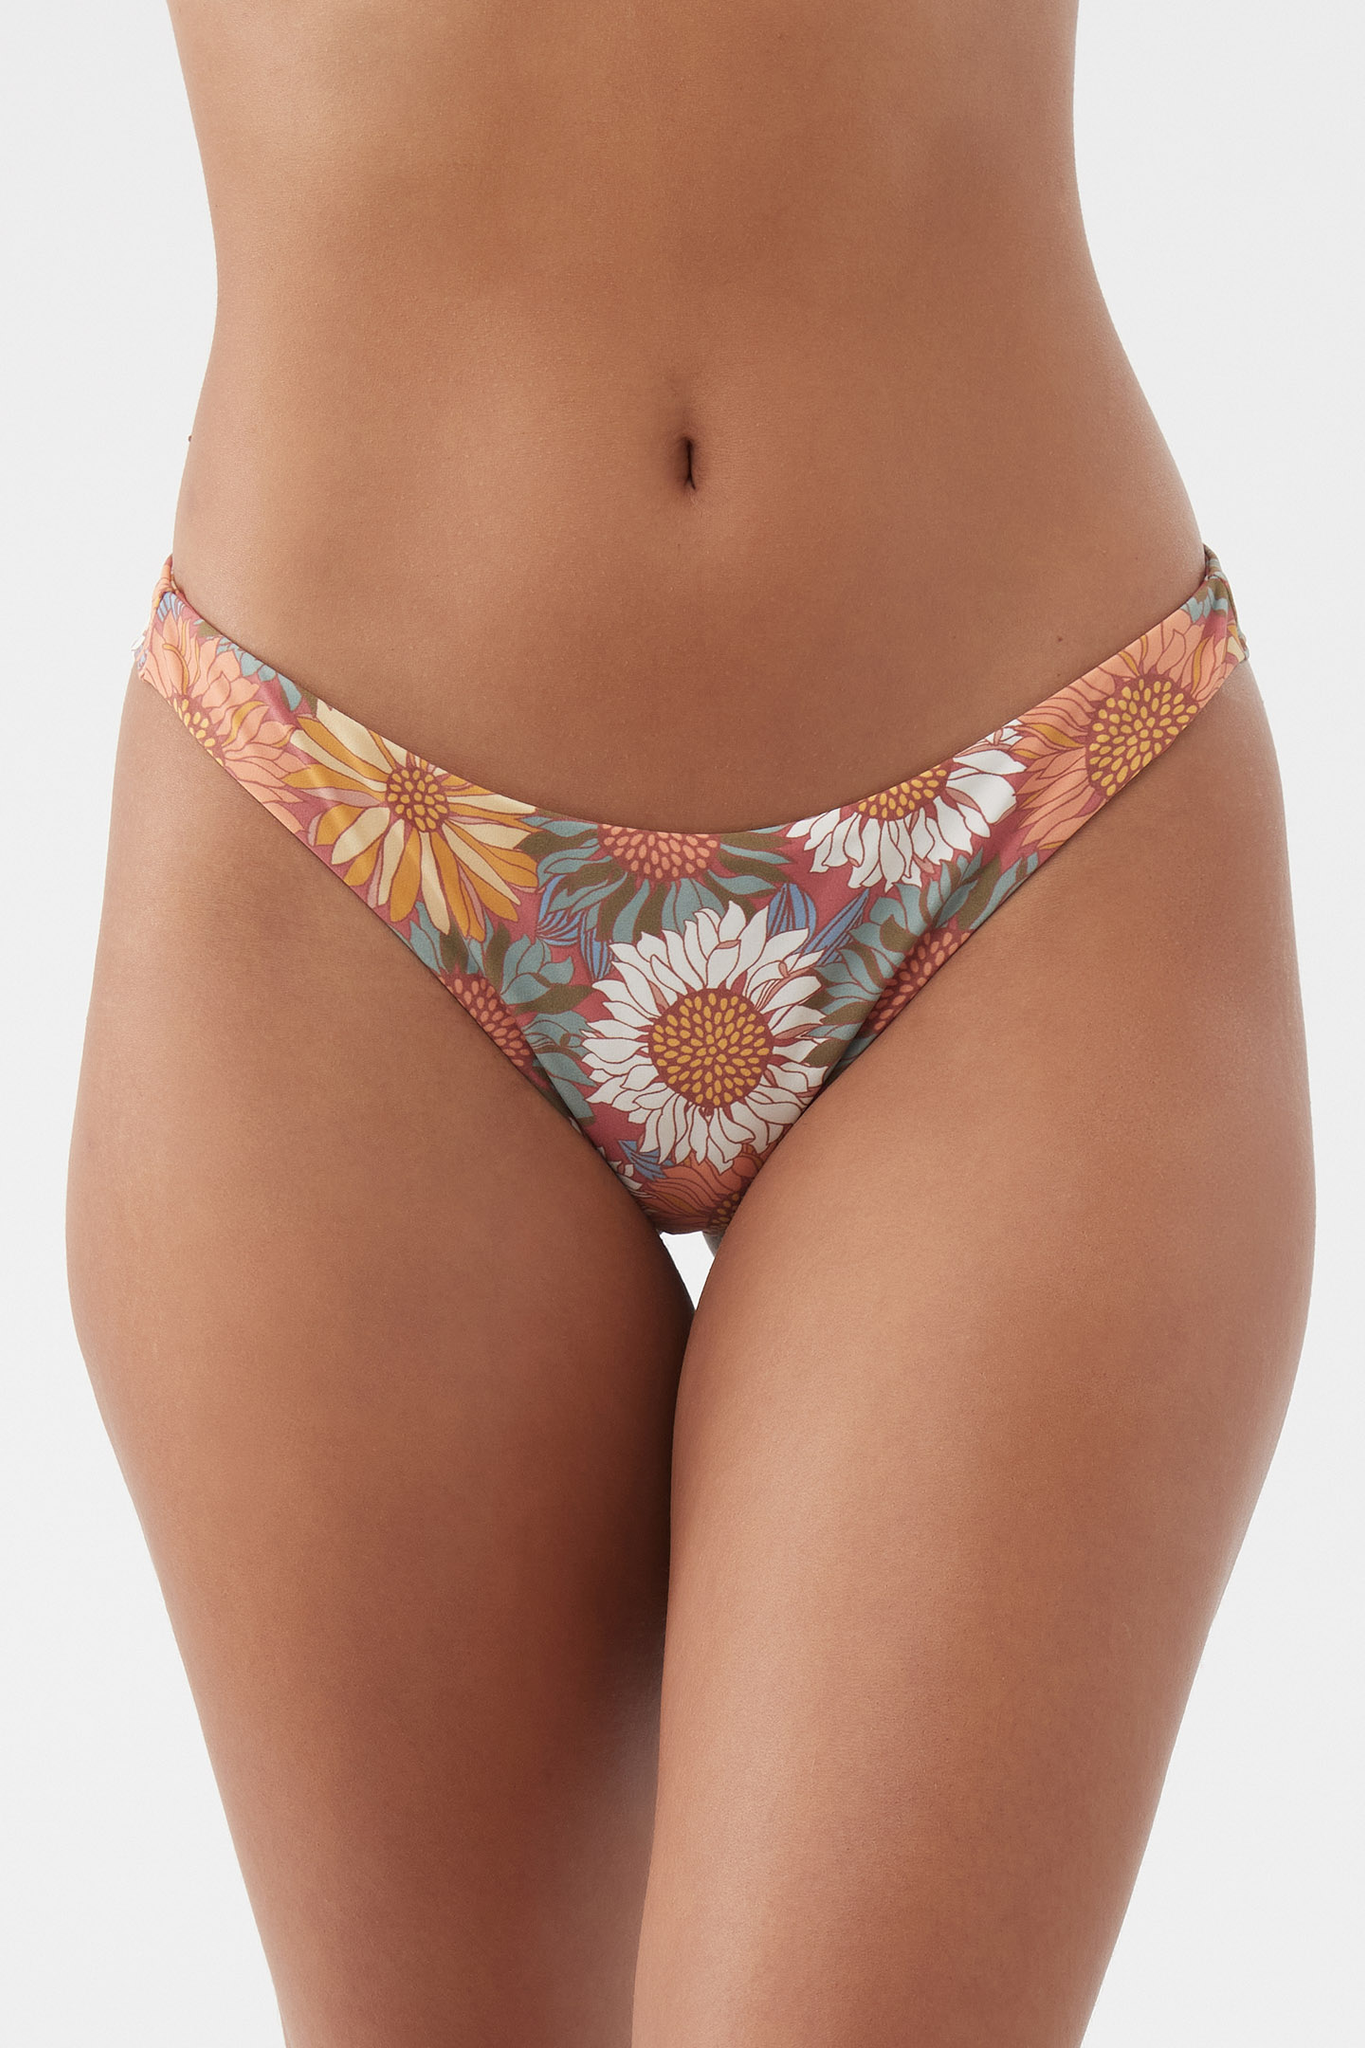 Girls Swimsuit, Size 14 16, Sunflower Print, Underwire Bikini Top From  Managuazi, $20.38